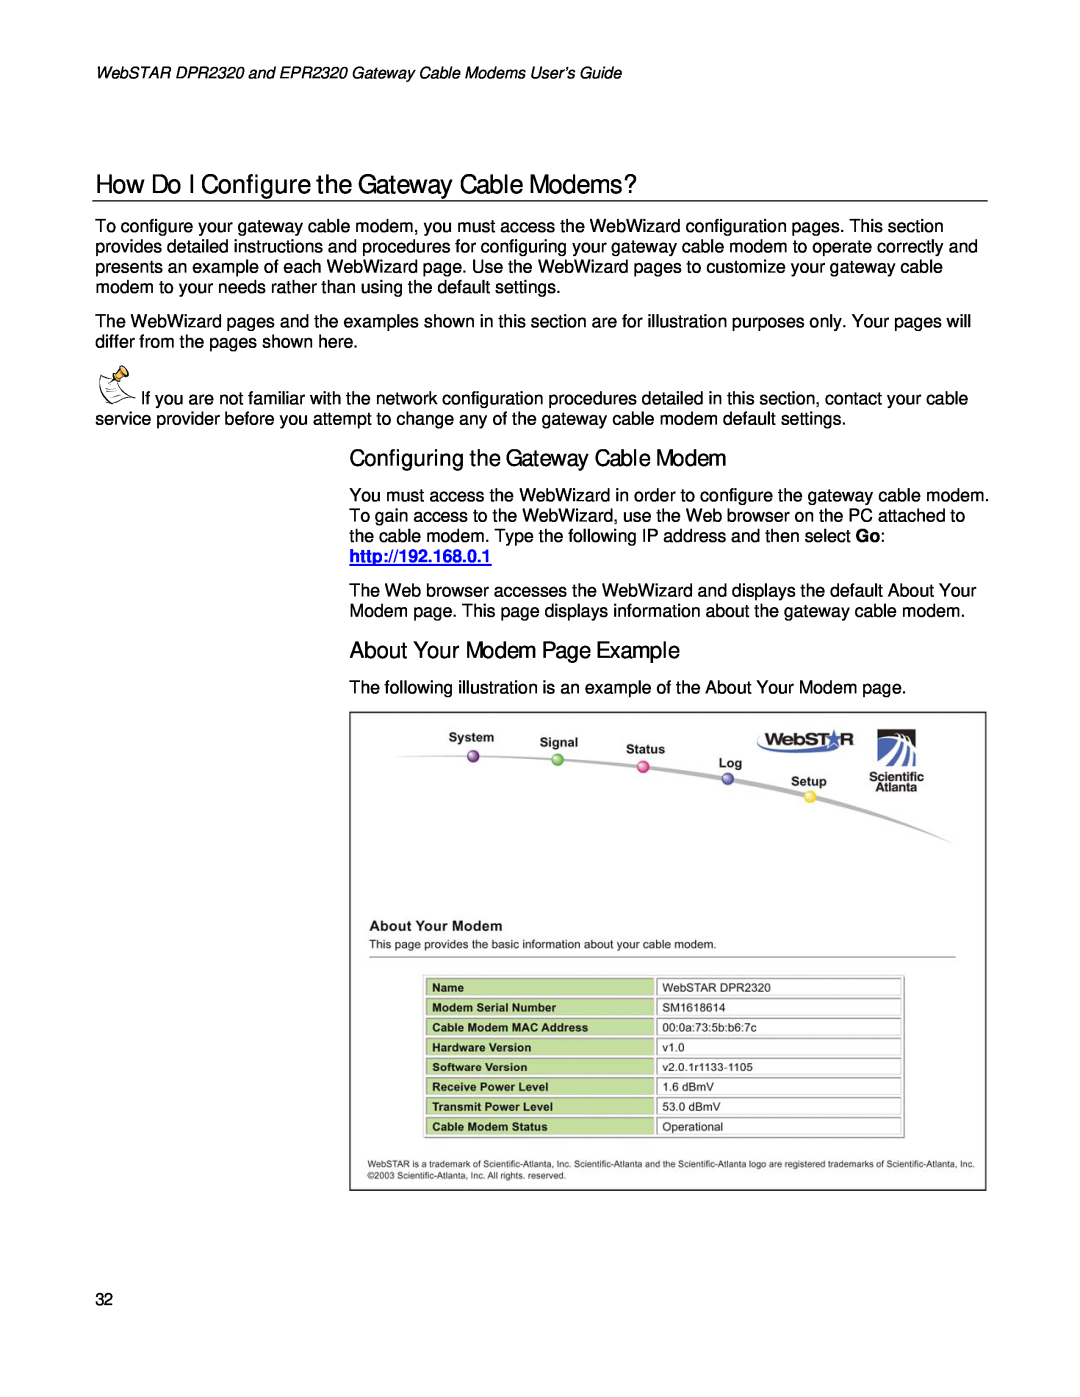 Apple DPR2320TM manual How Do I Configure the Gateway Cable Modems?, Configuring the Gateway Cable Modem, http//192.168.0.1 